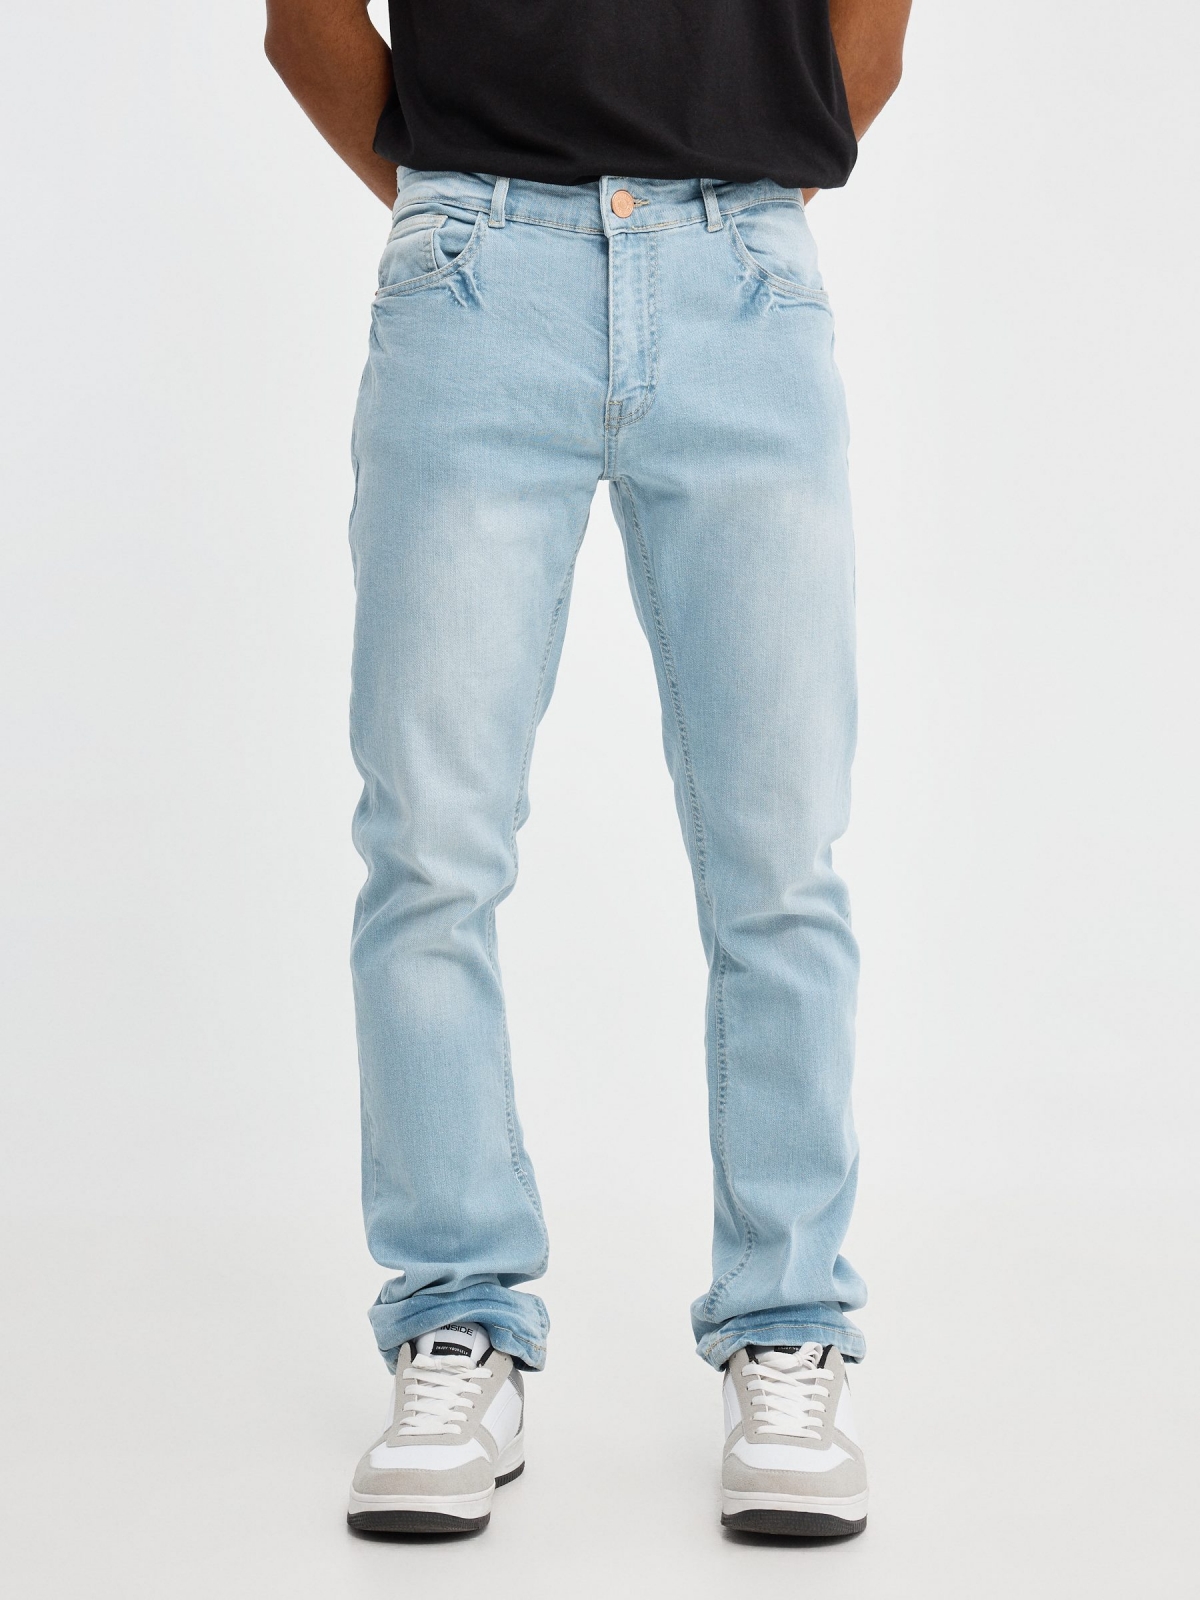 Jeans básicos azul claro azul vista media frontal